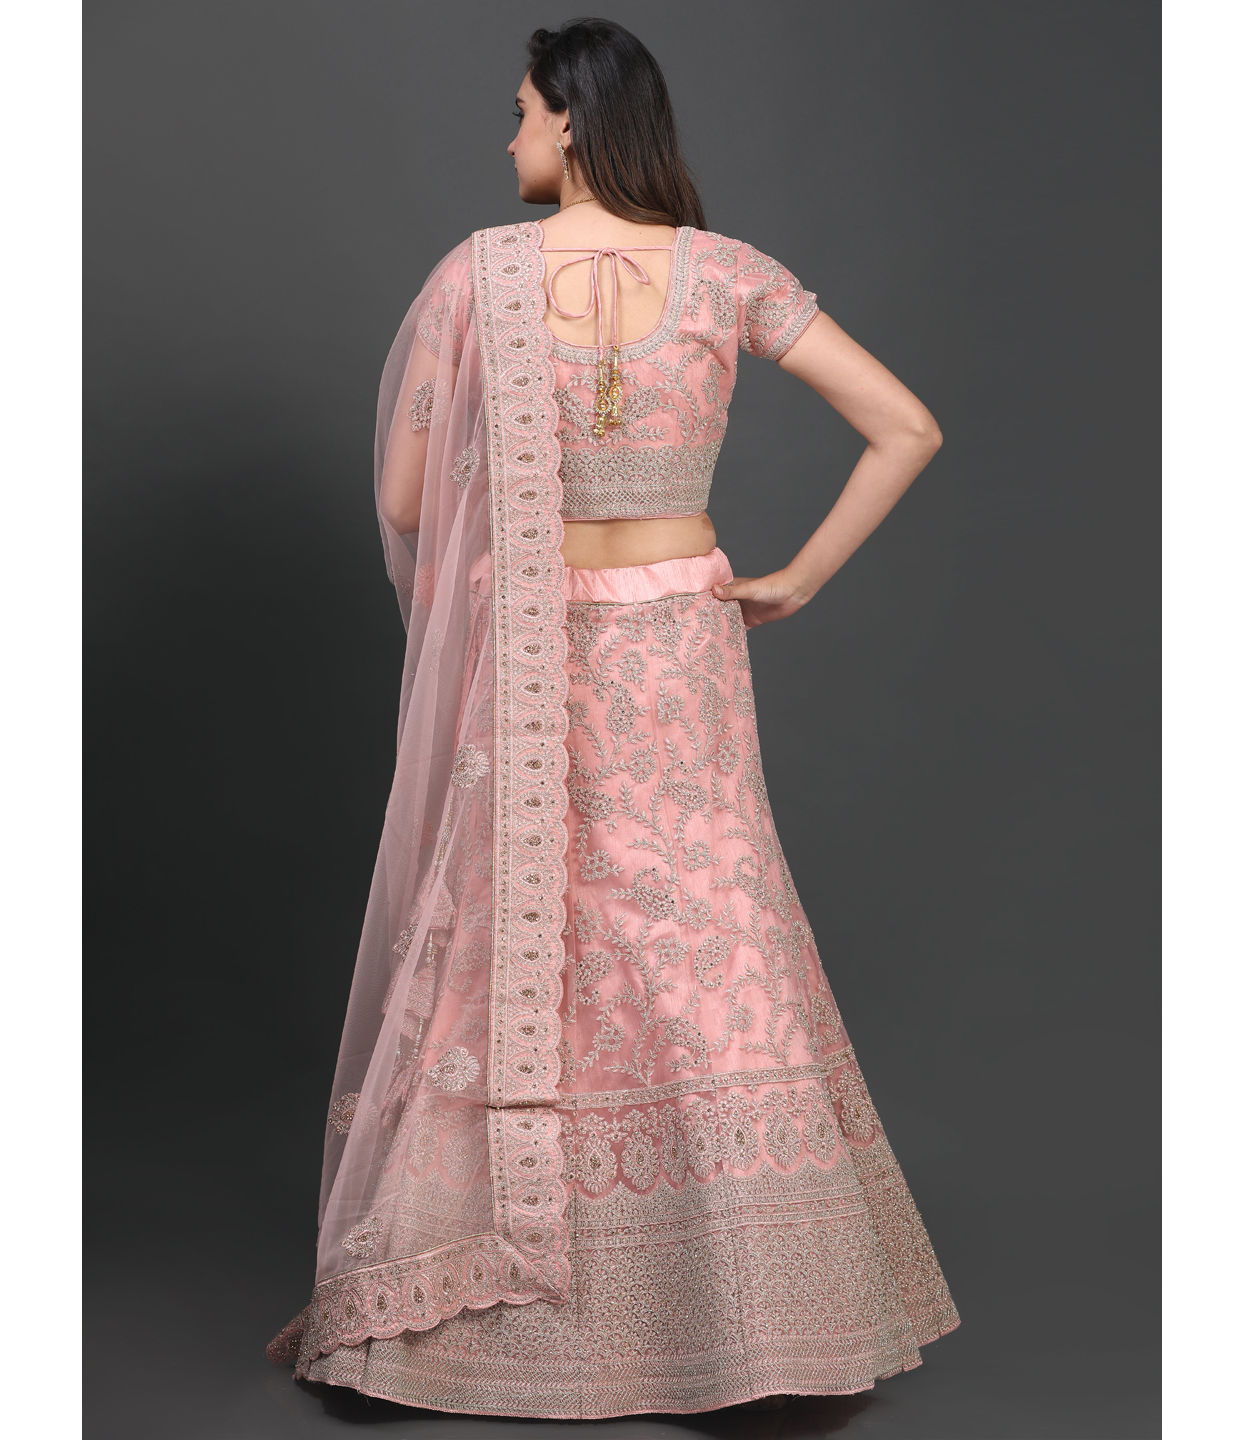 Buy Exquisite Pink Lehenga Online in India @Mohey - Lehenga for Women